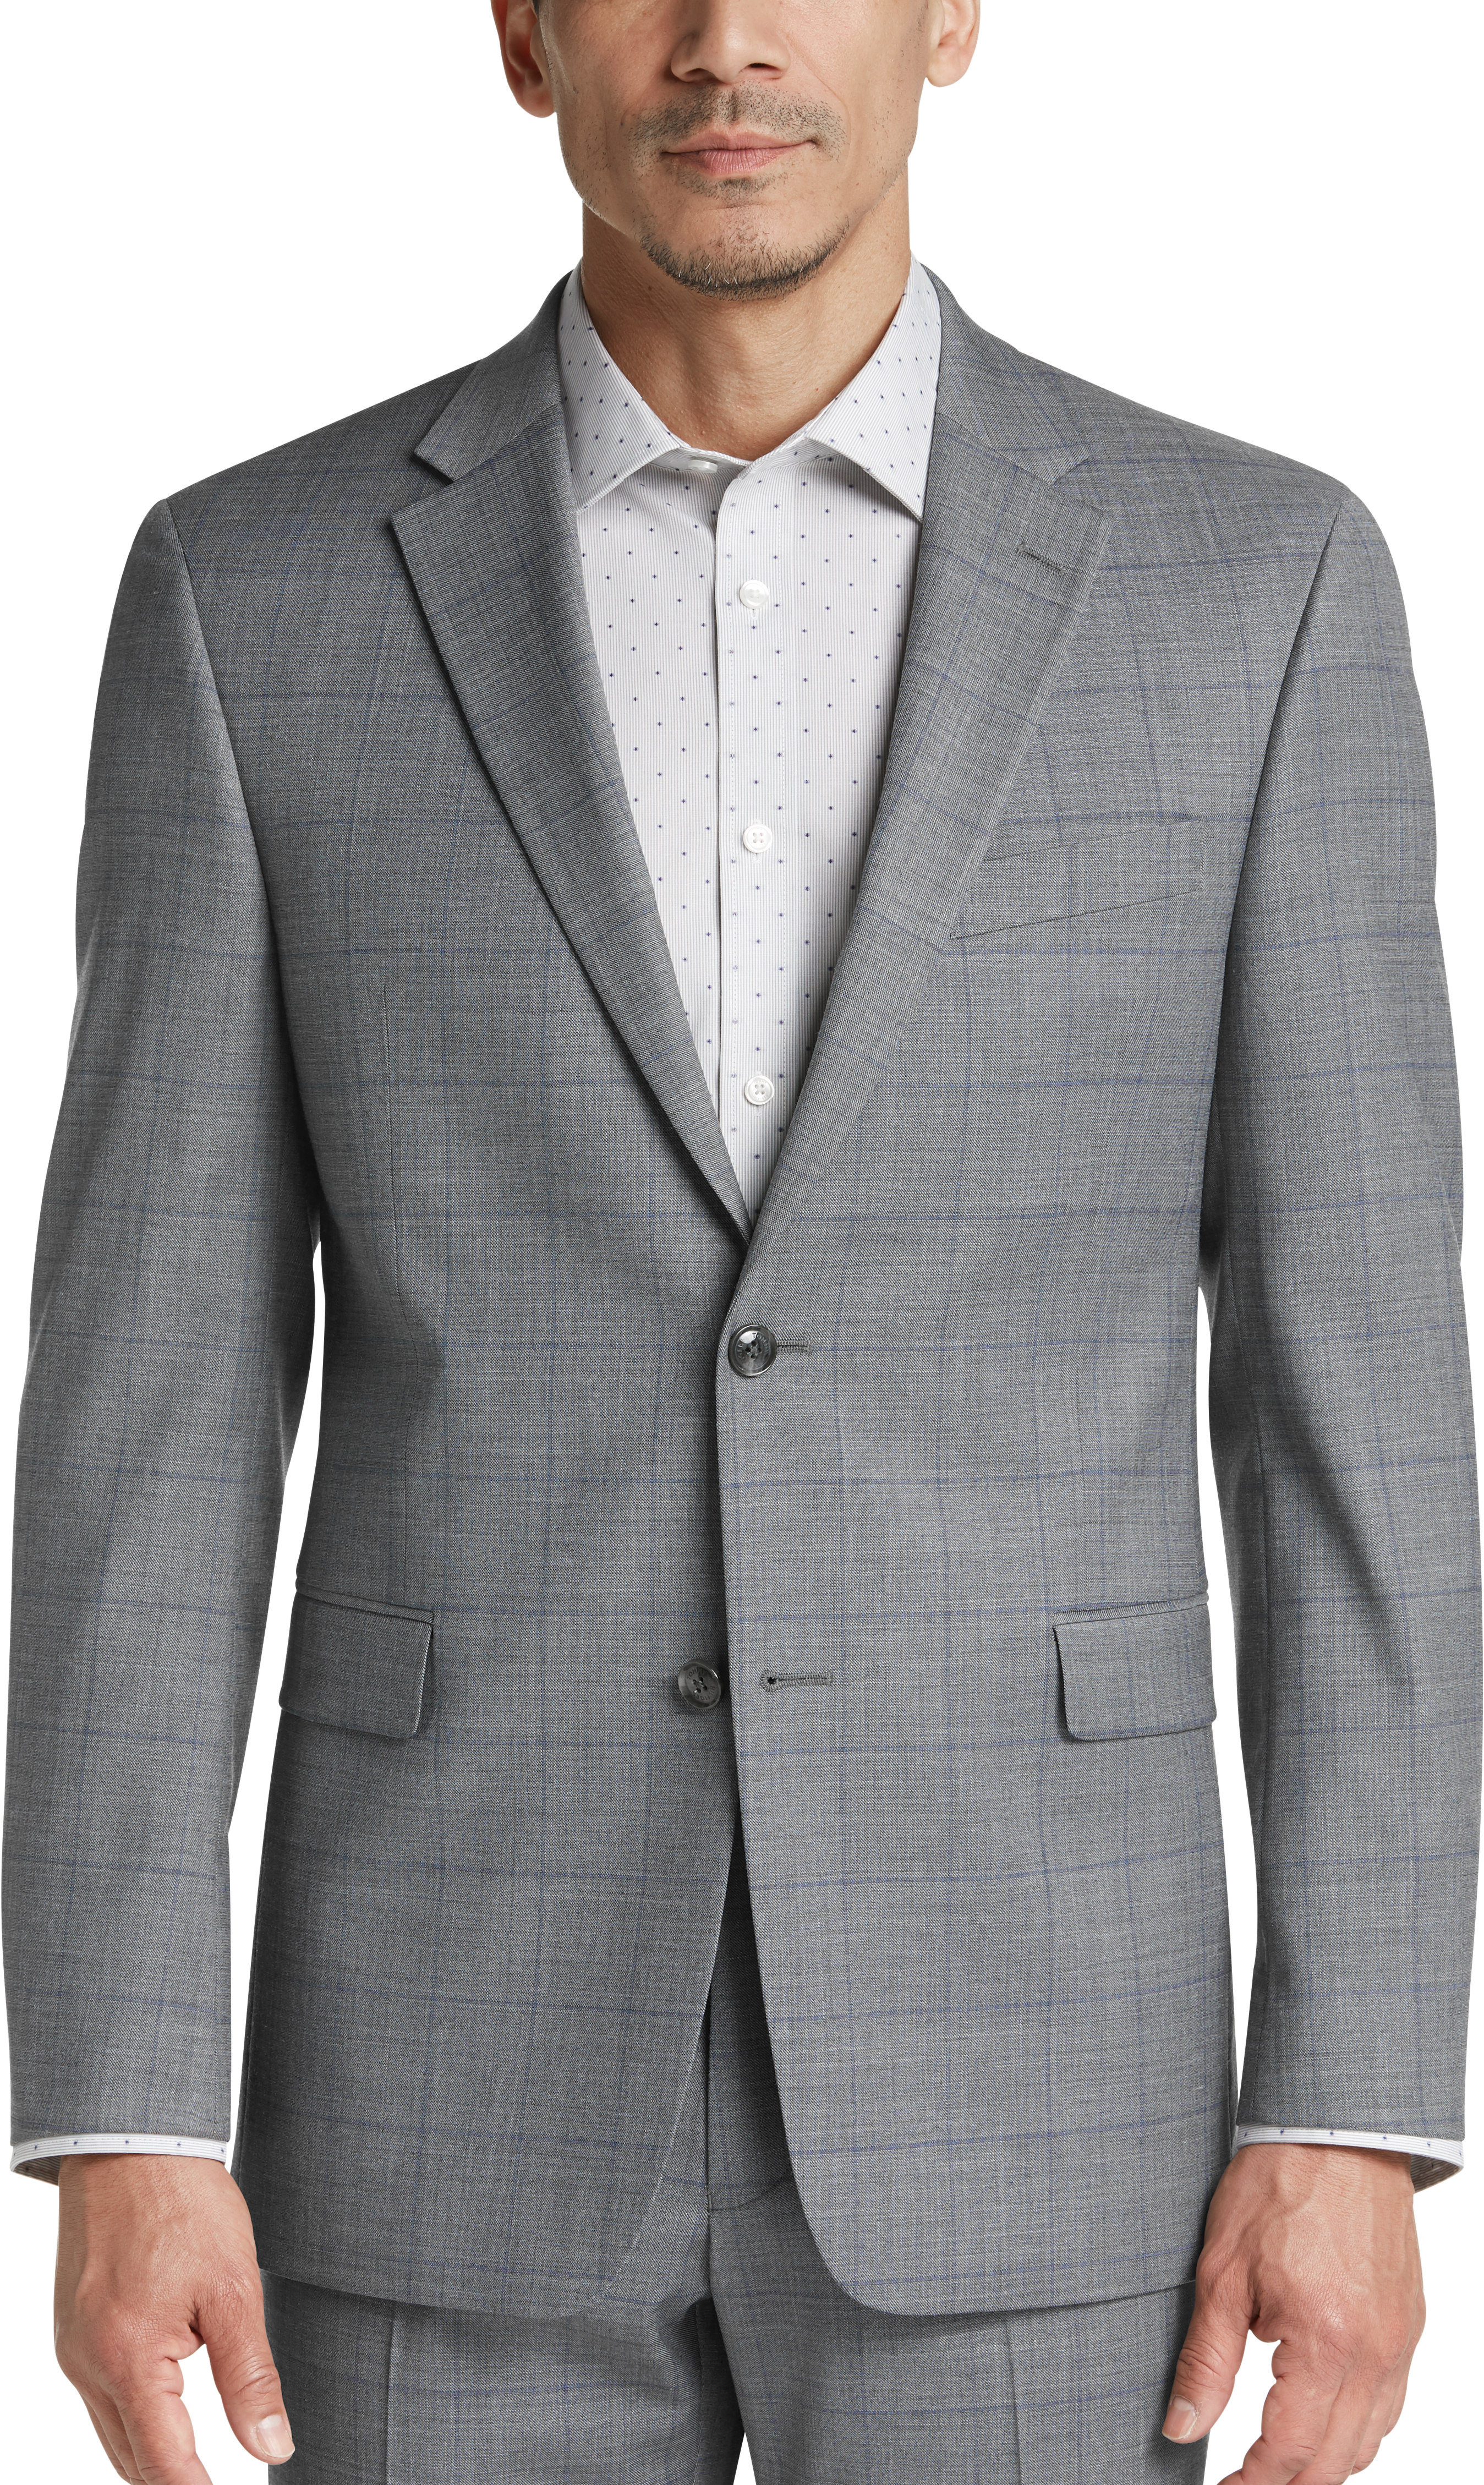 tommy hilfiger gray suit